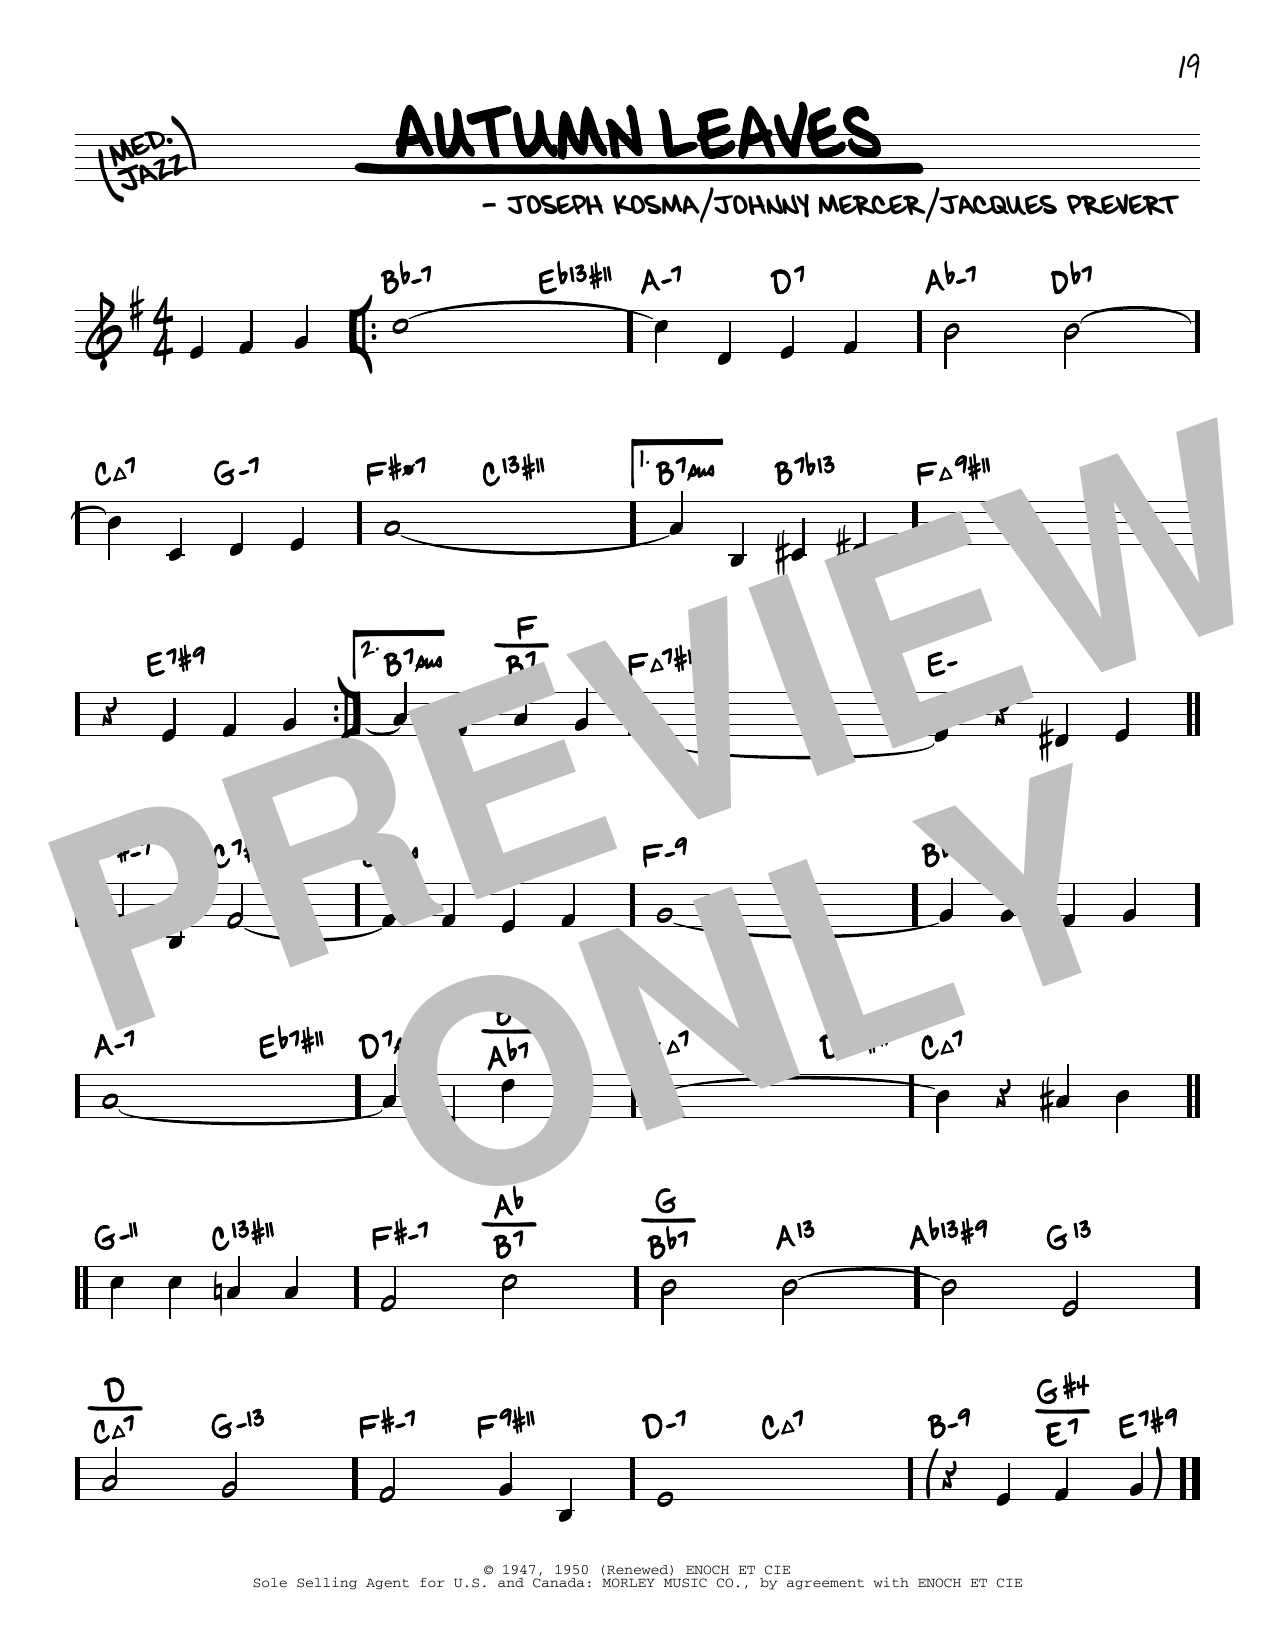 Joseph Kosma Autumn Leaves (arr. David Hazeltine) Sheet Music Notes & Chords for Real Book – Enhanced Chords - Download or Print PDF